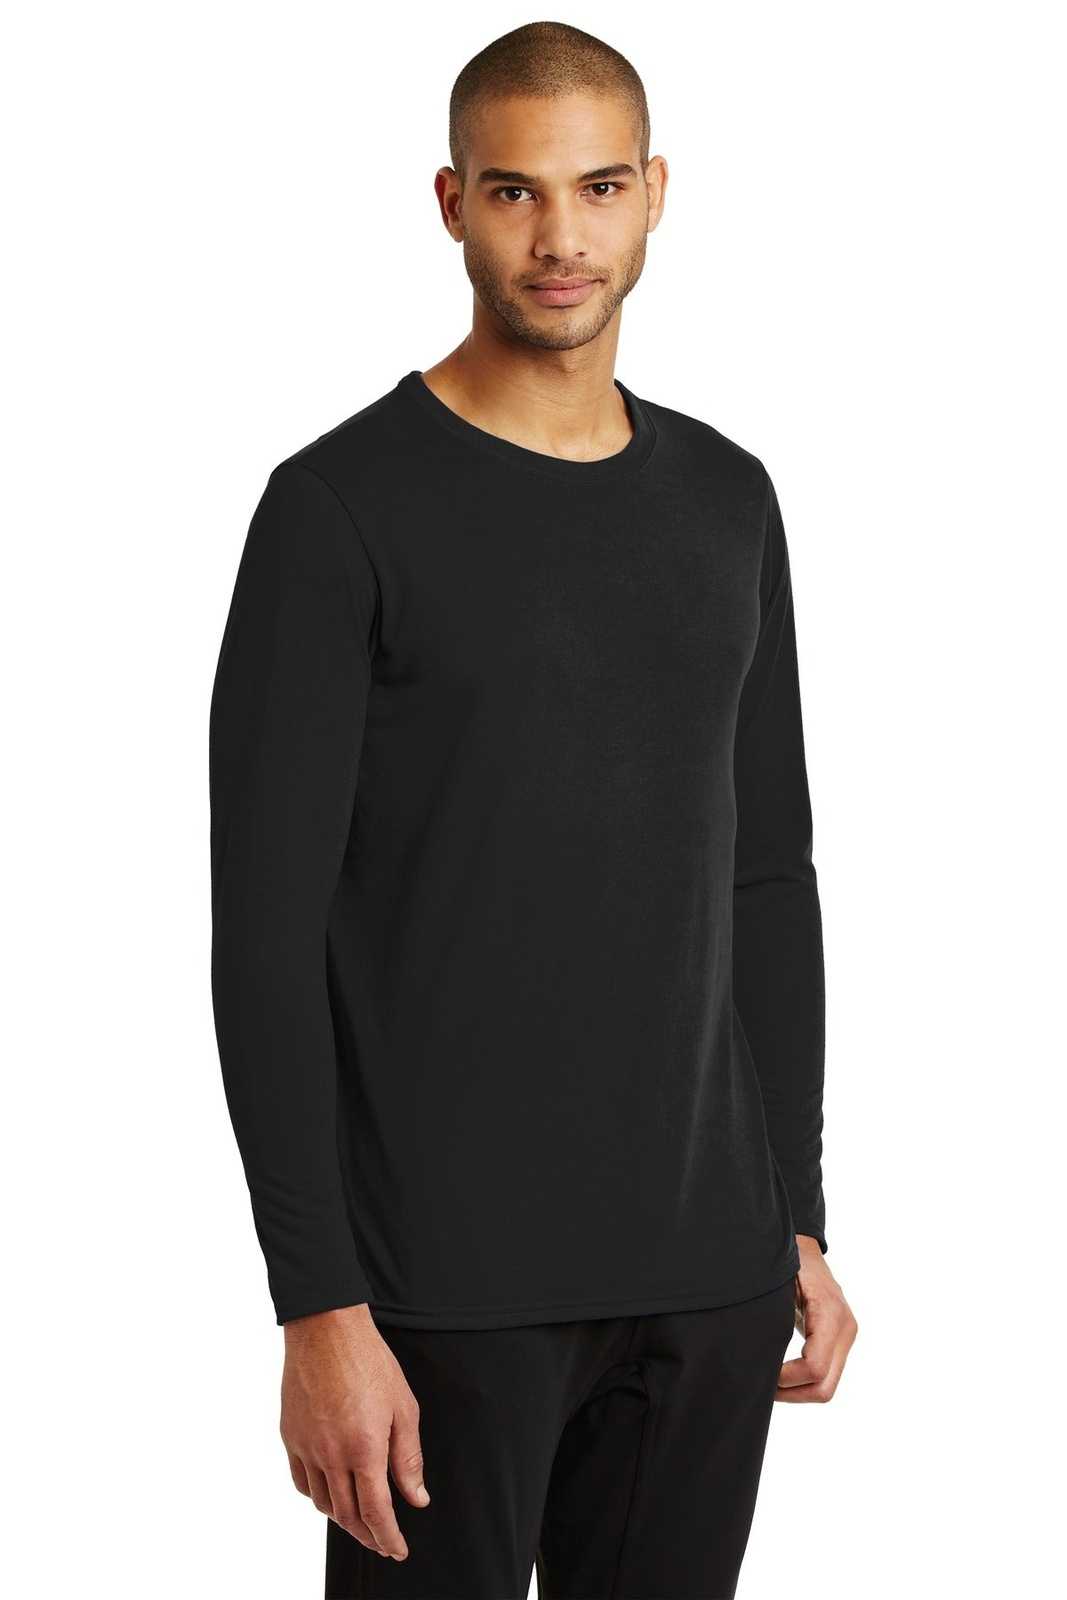 Gildan 42400 Performance Long Sleeve T-Shirt - Black - HIT a Double